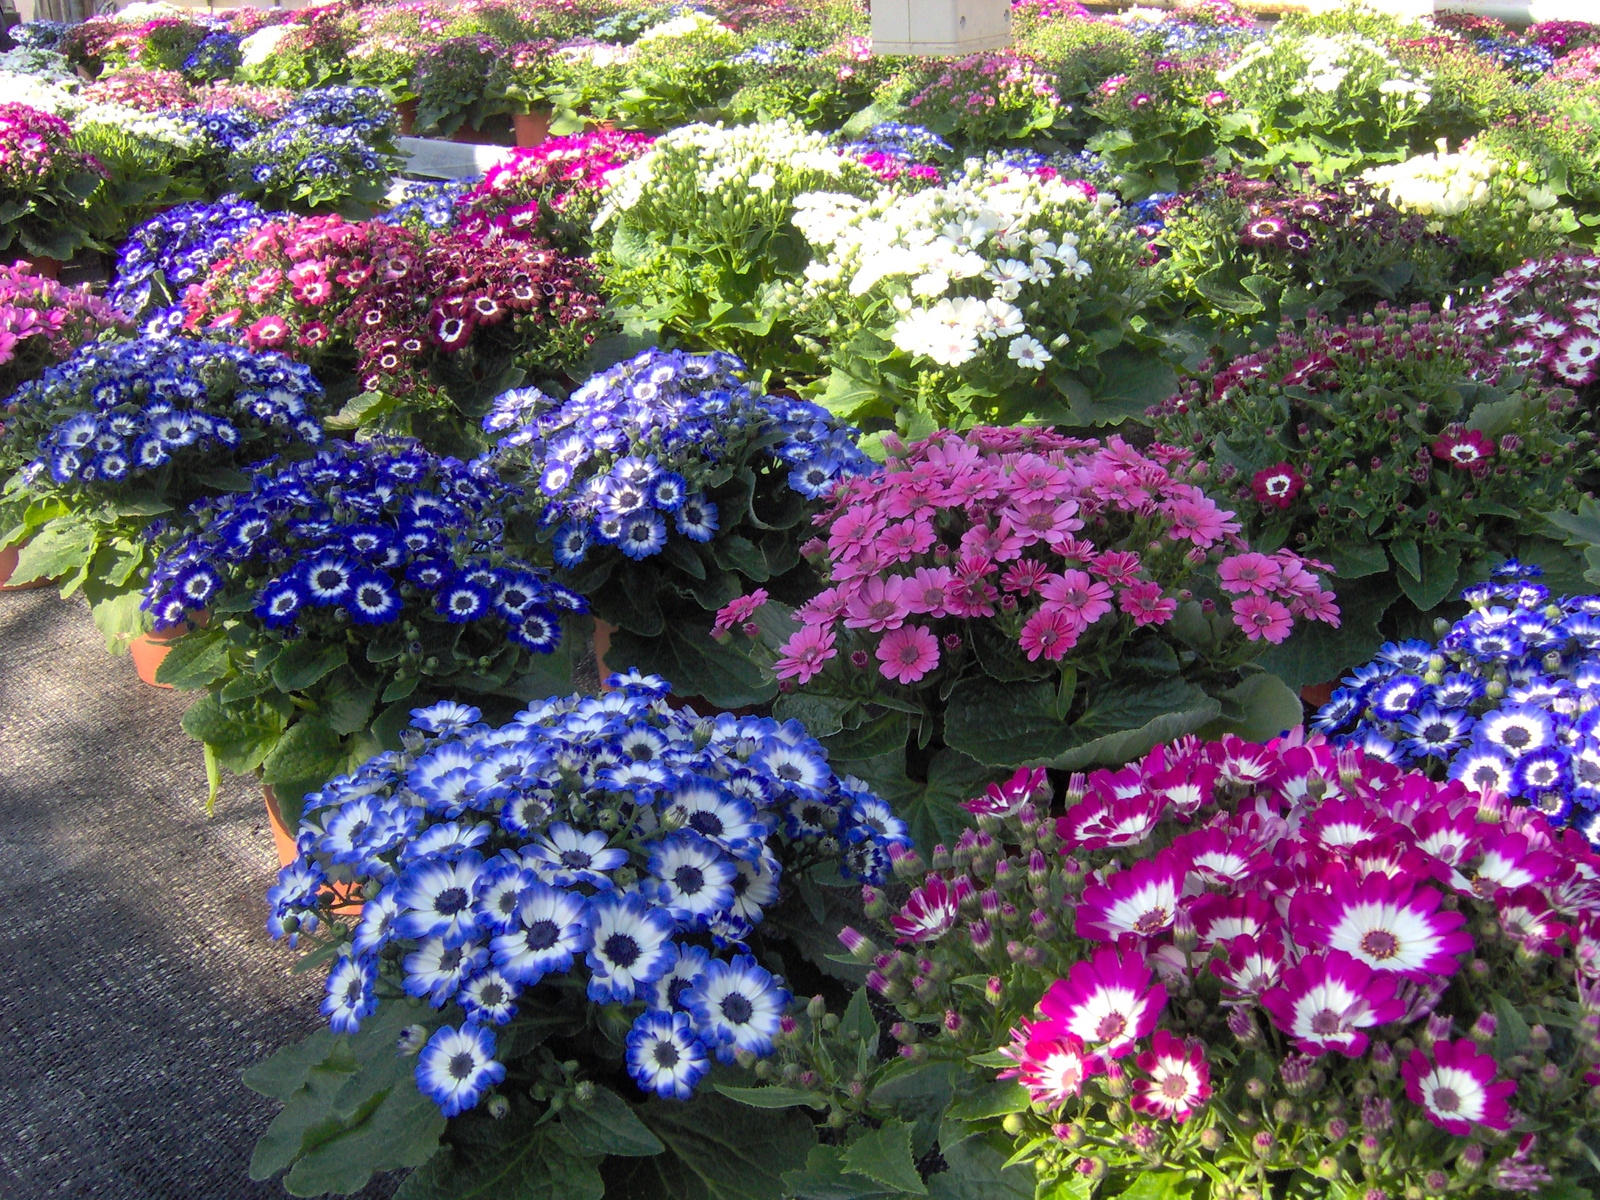 tavaszi virágok - Kedvenc utazásaink - indafoto.hu